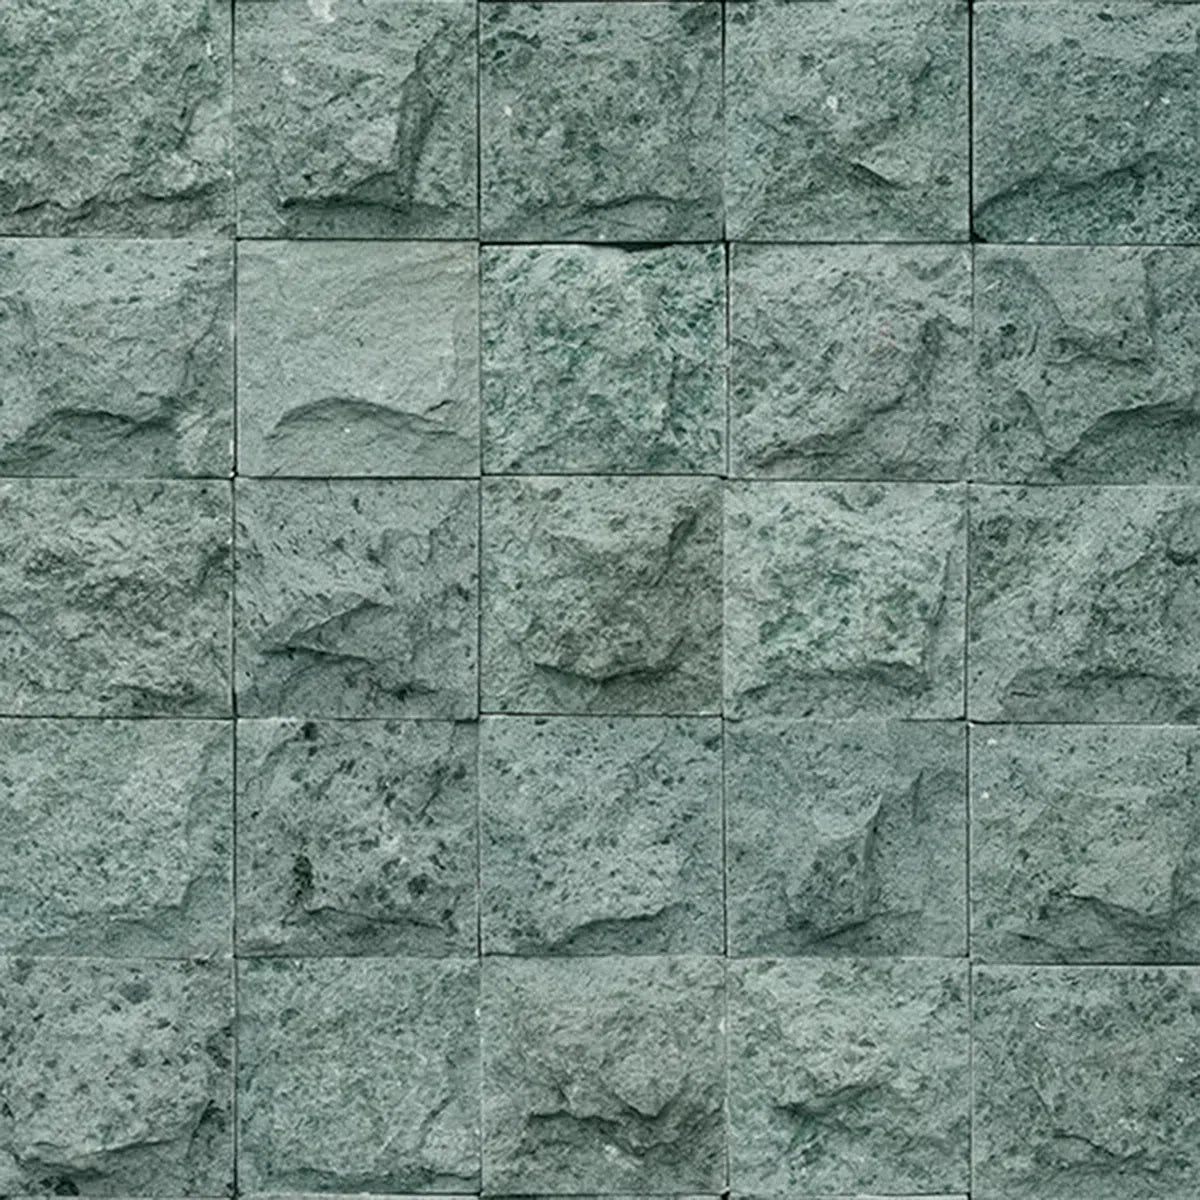 Hijau Stone 10x10cm Natural Premium, 0.50 m² box